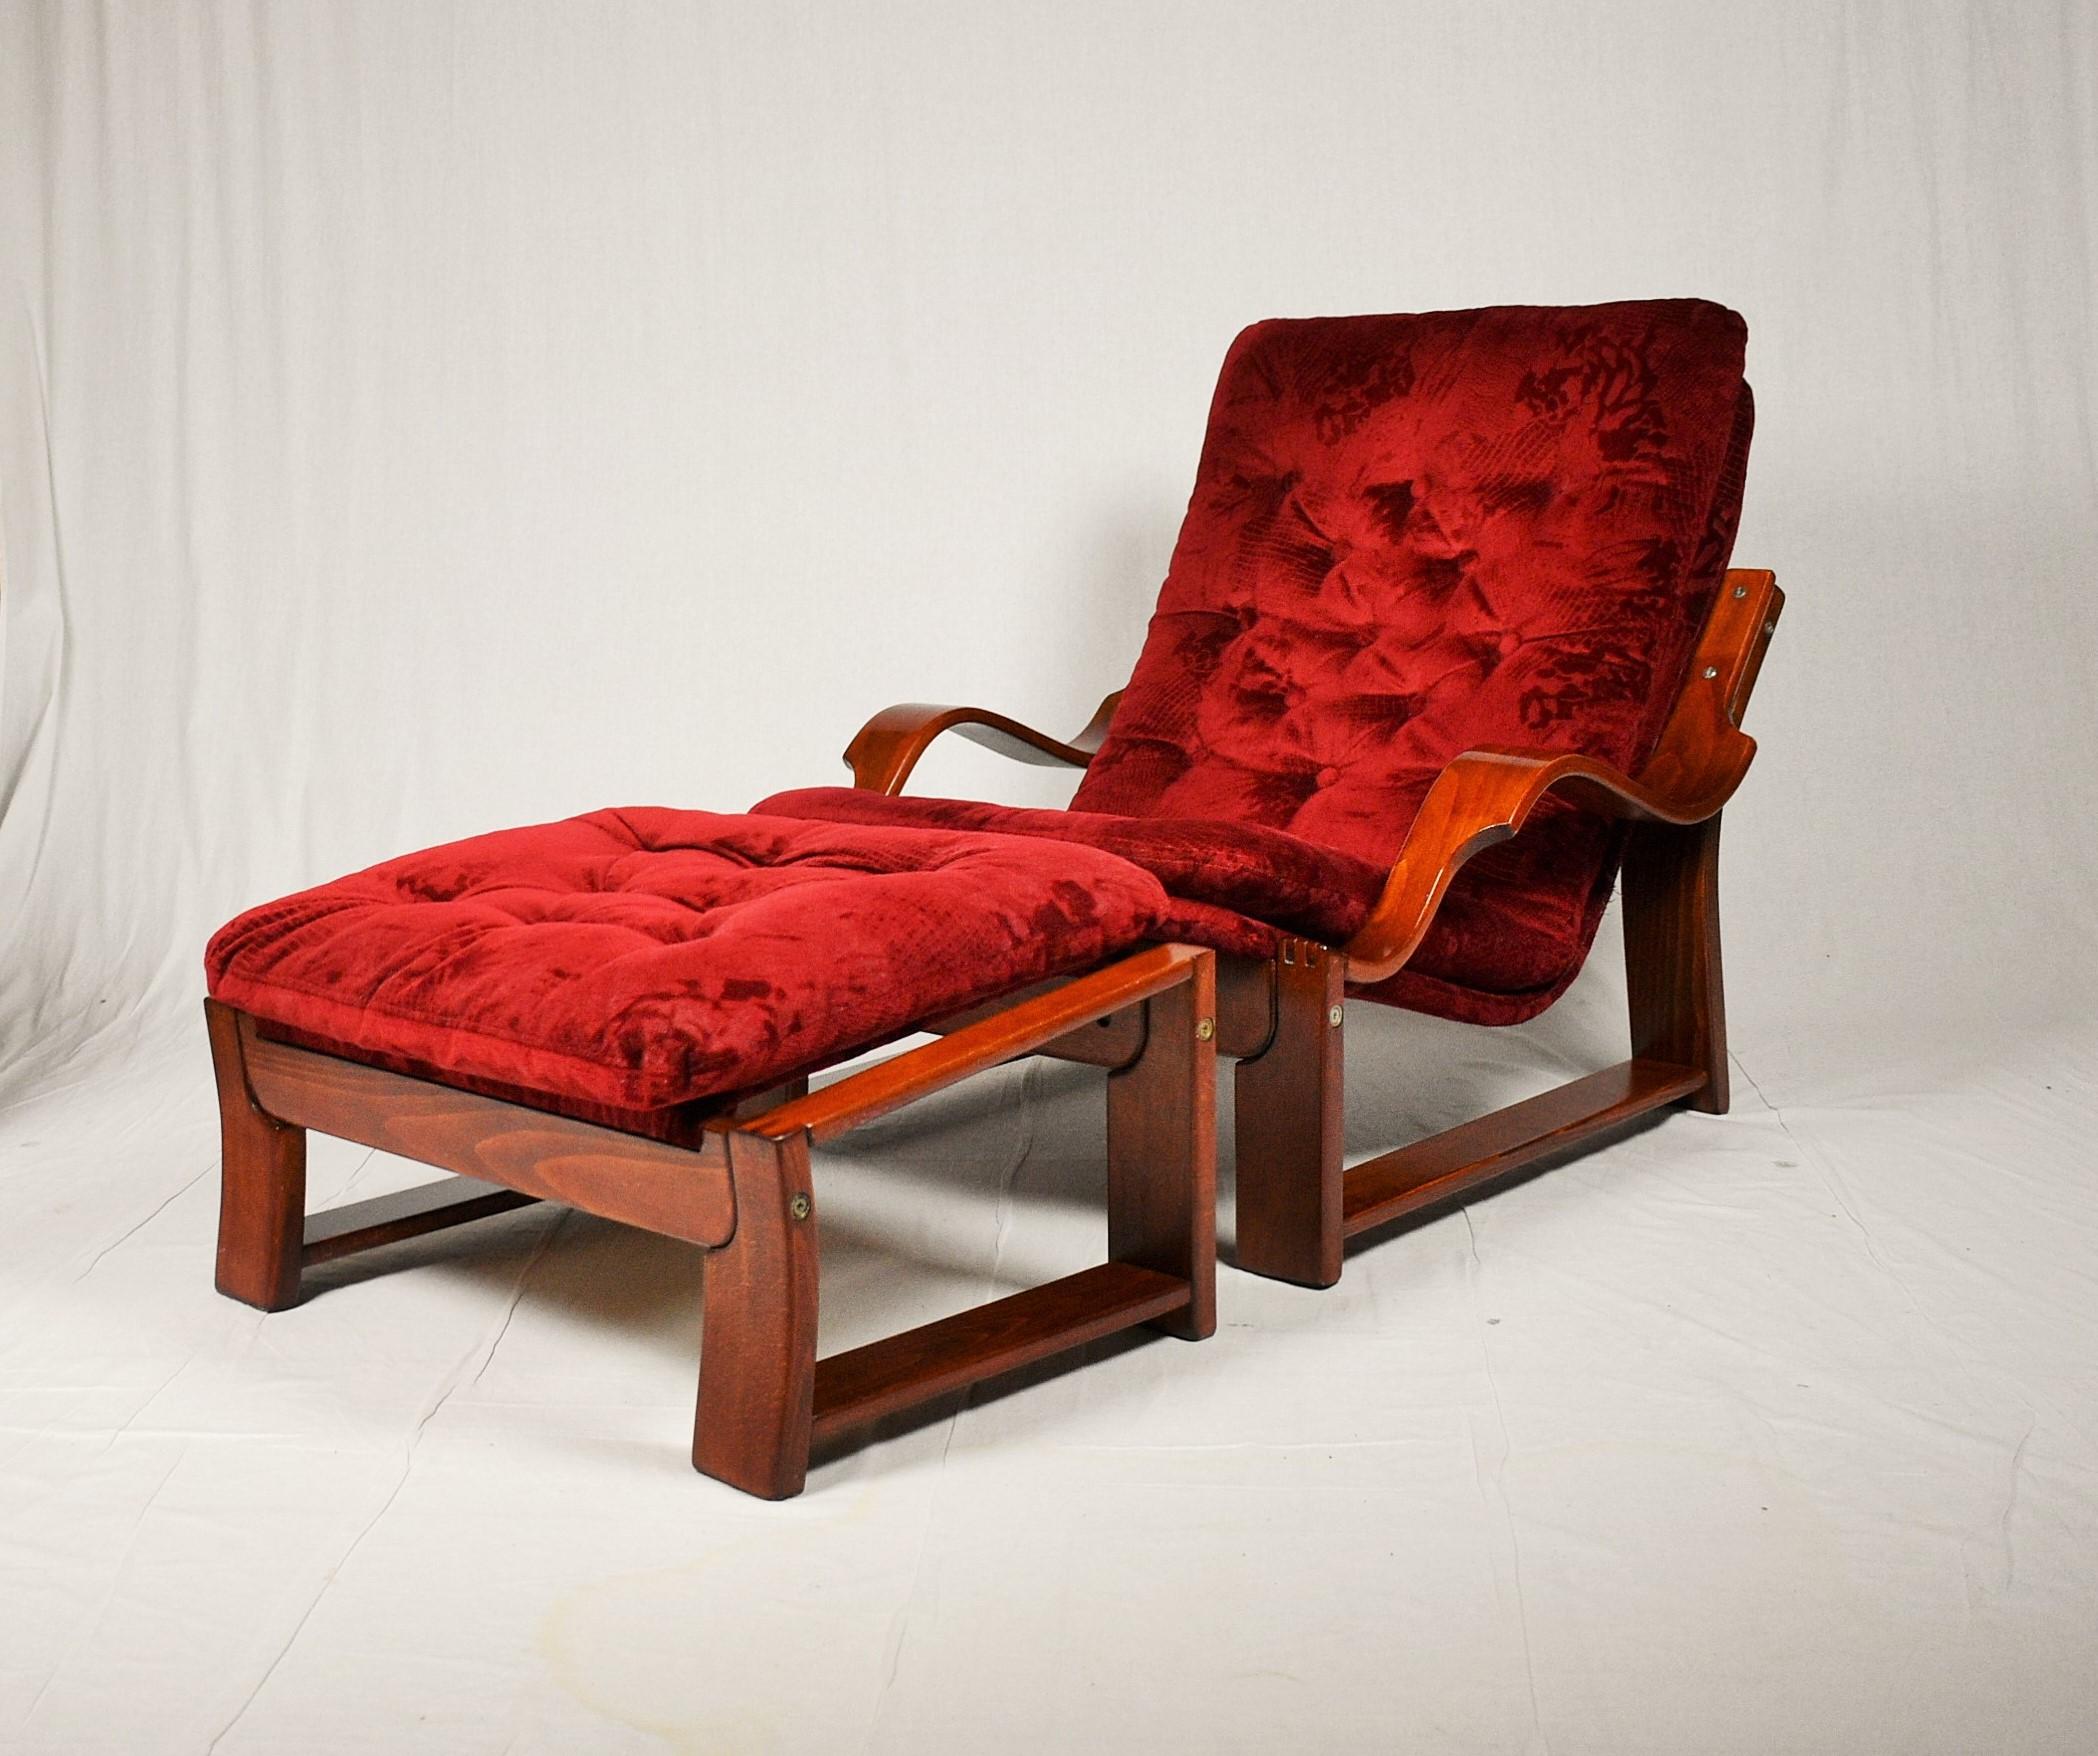 - Made of wood, fabric
- Good, original upholstery
- Good, original condition.